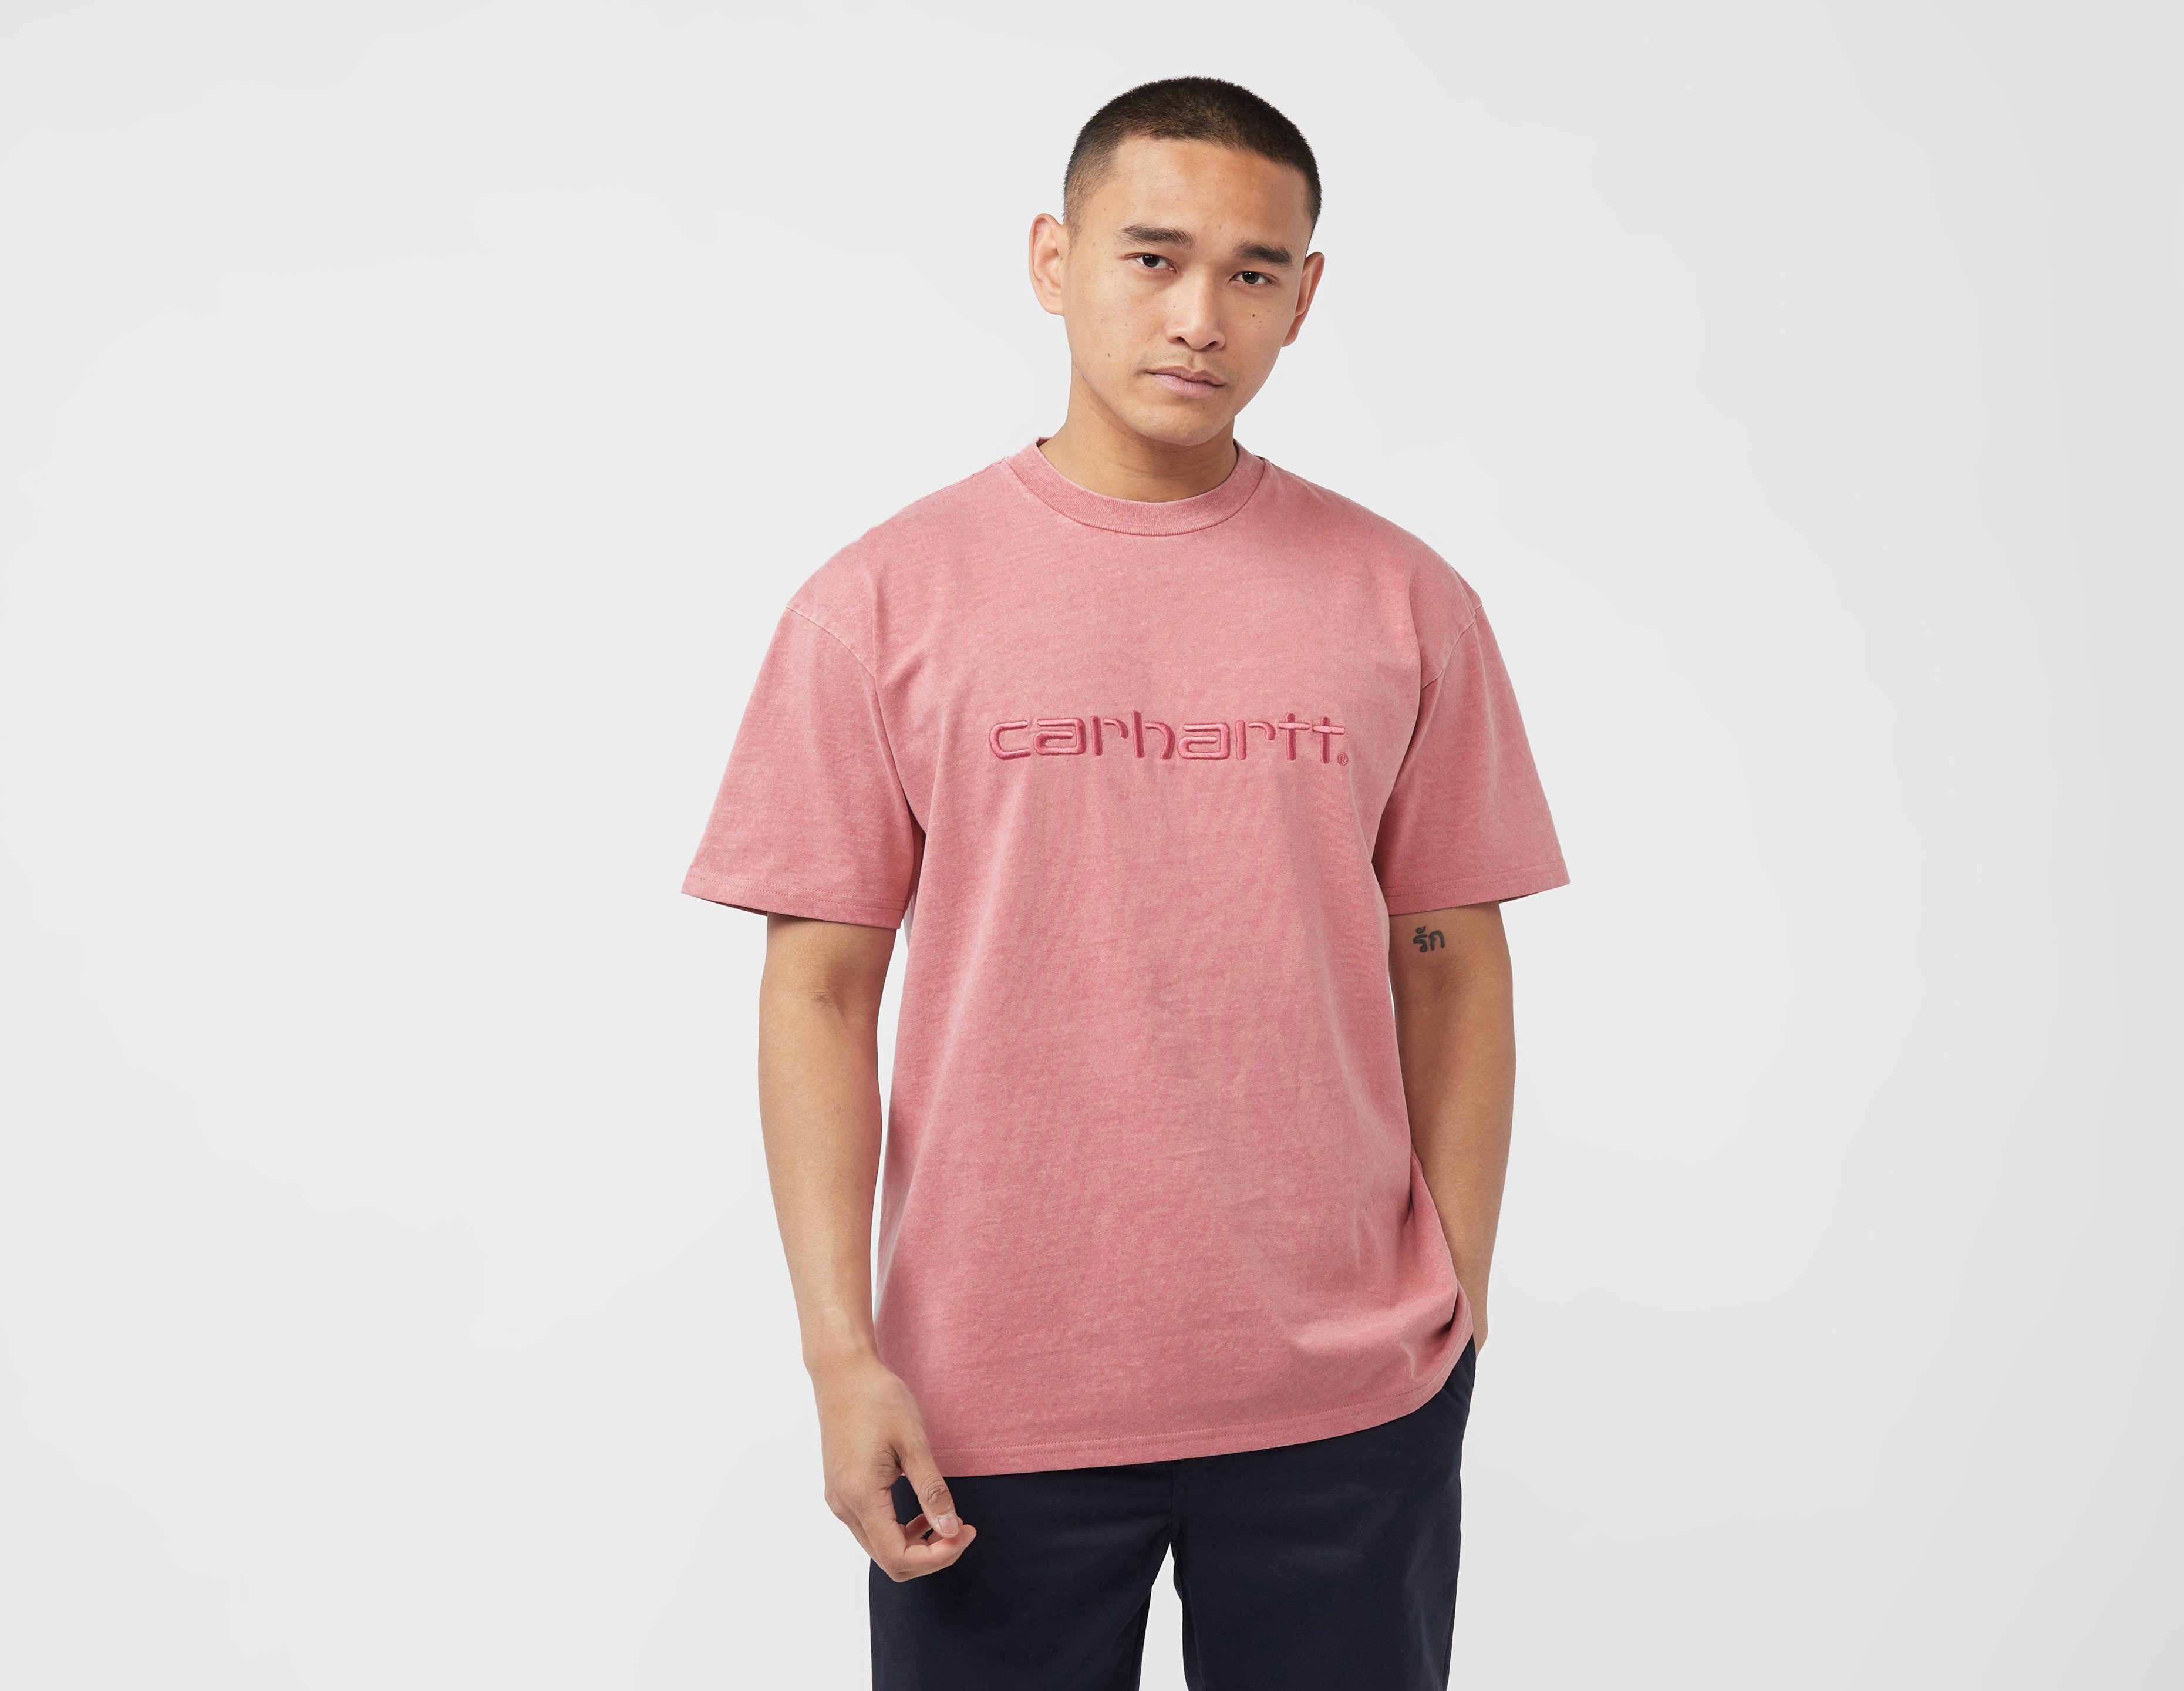 graff goat Pink Duster T black WIP crew Healthdesign? Carhartt - | crew Shirt goat shirt - party